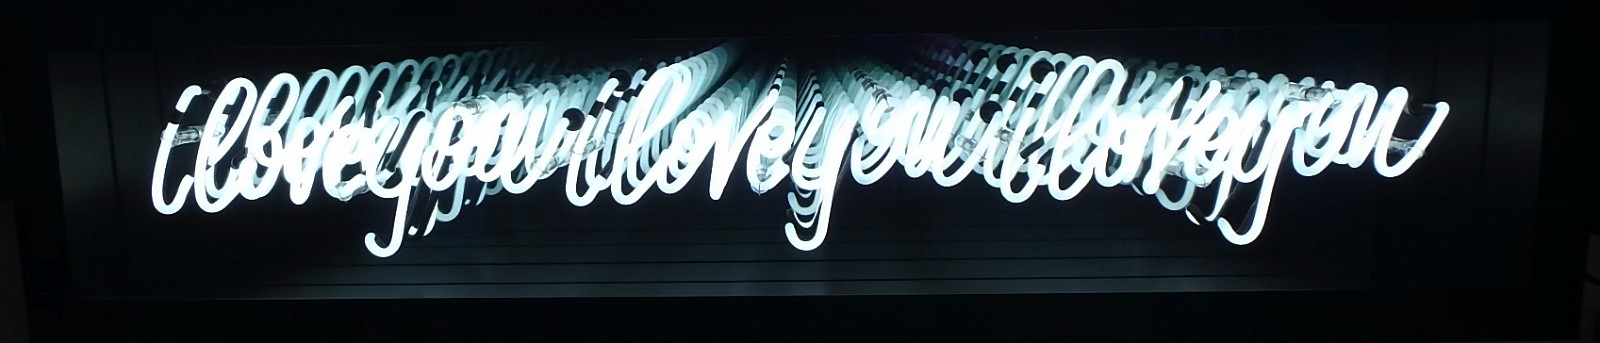 David Drebin, I Love You Infinity, 2020
Neon and LED Light Installation, 57 x 13 x 8 inches